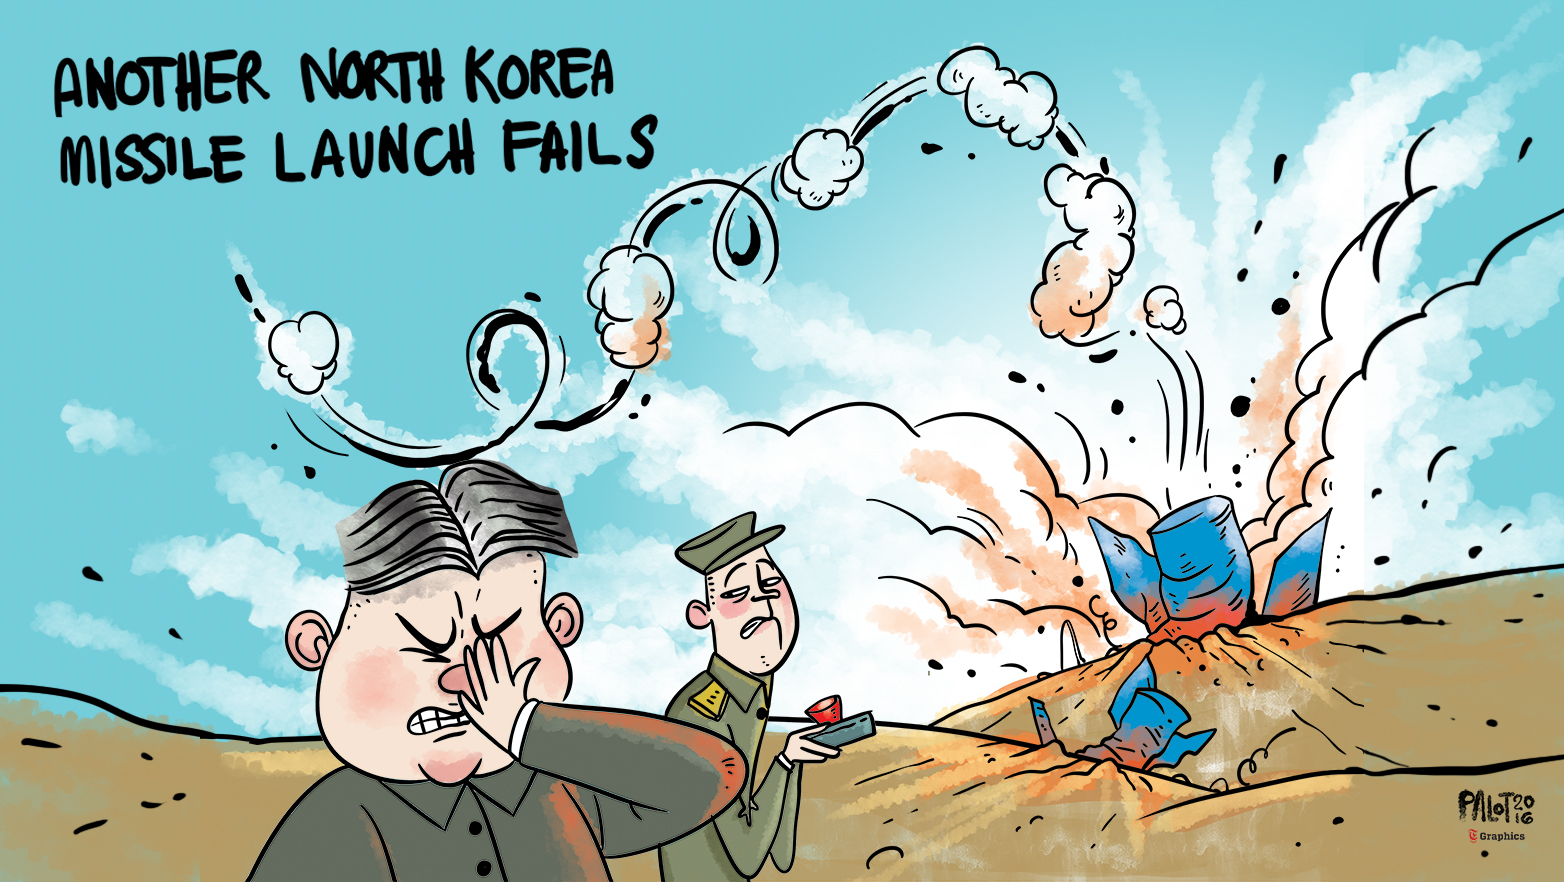 North Korea missile test fails